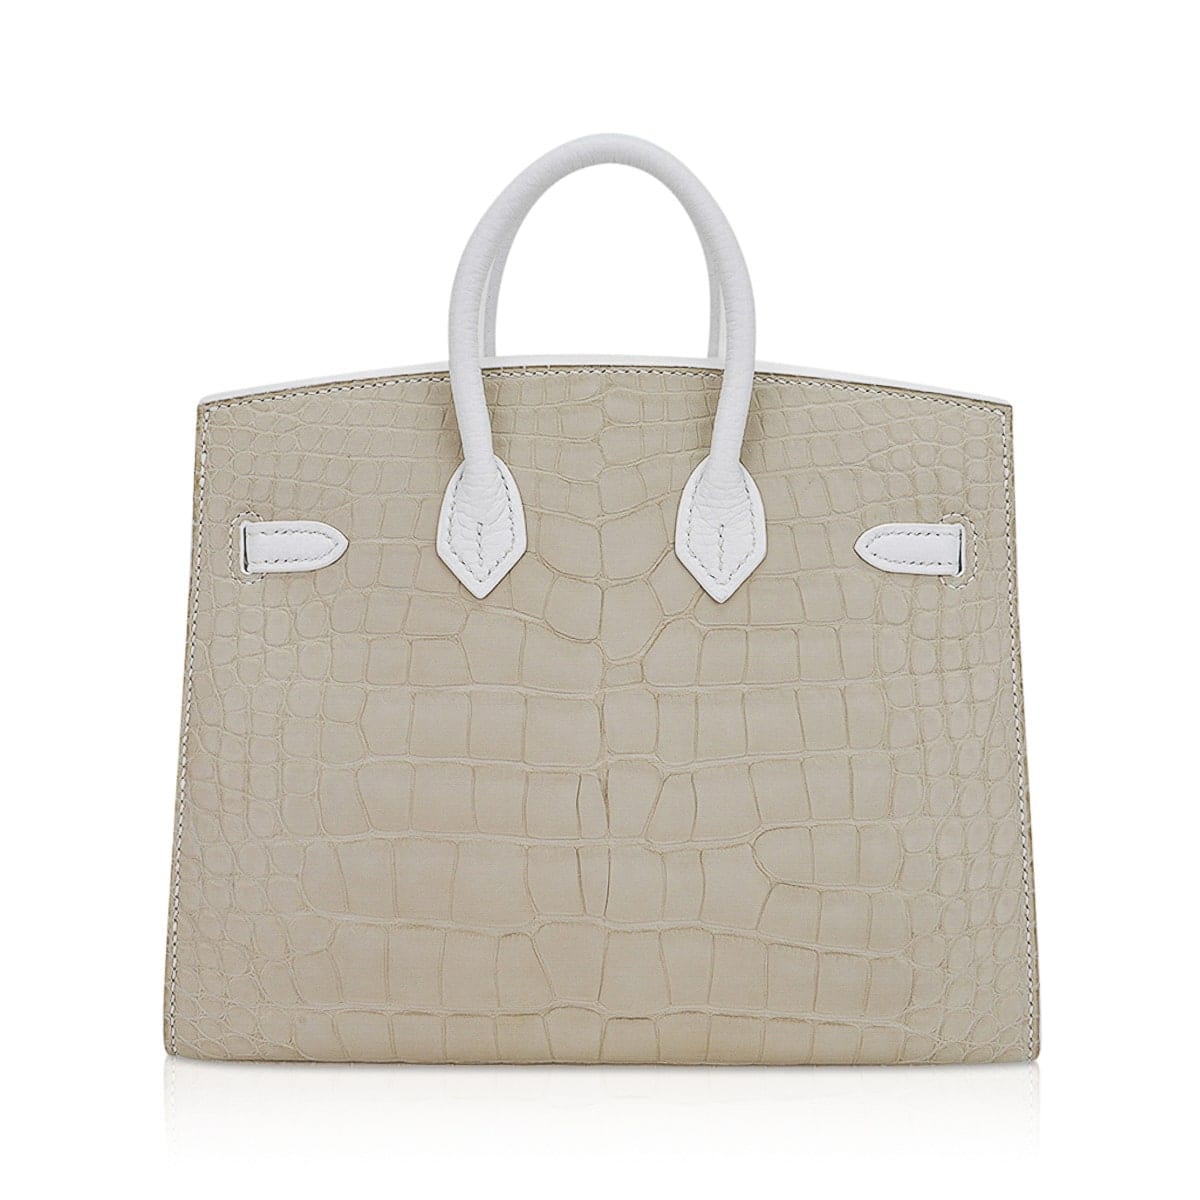 Hermes Limited Edition Birkin 20 Faubourg Sellier Bag Neige (Snow) White Matte Alligator